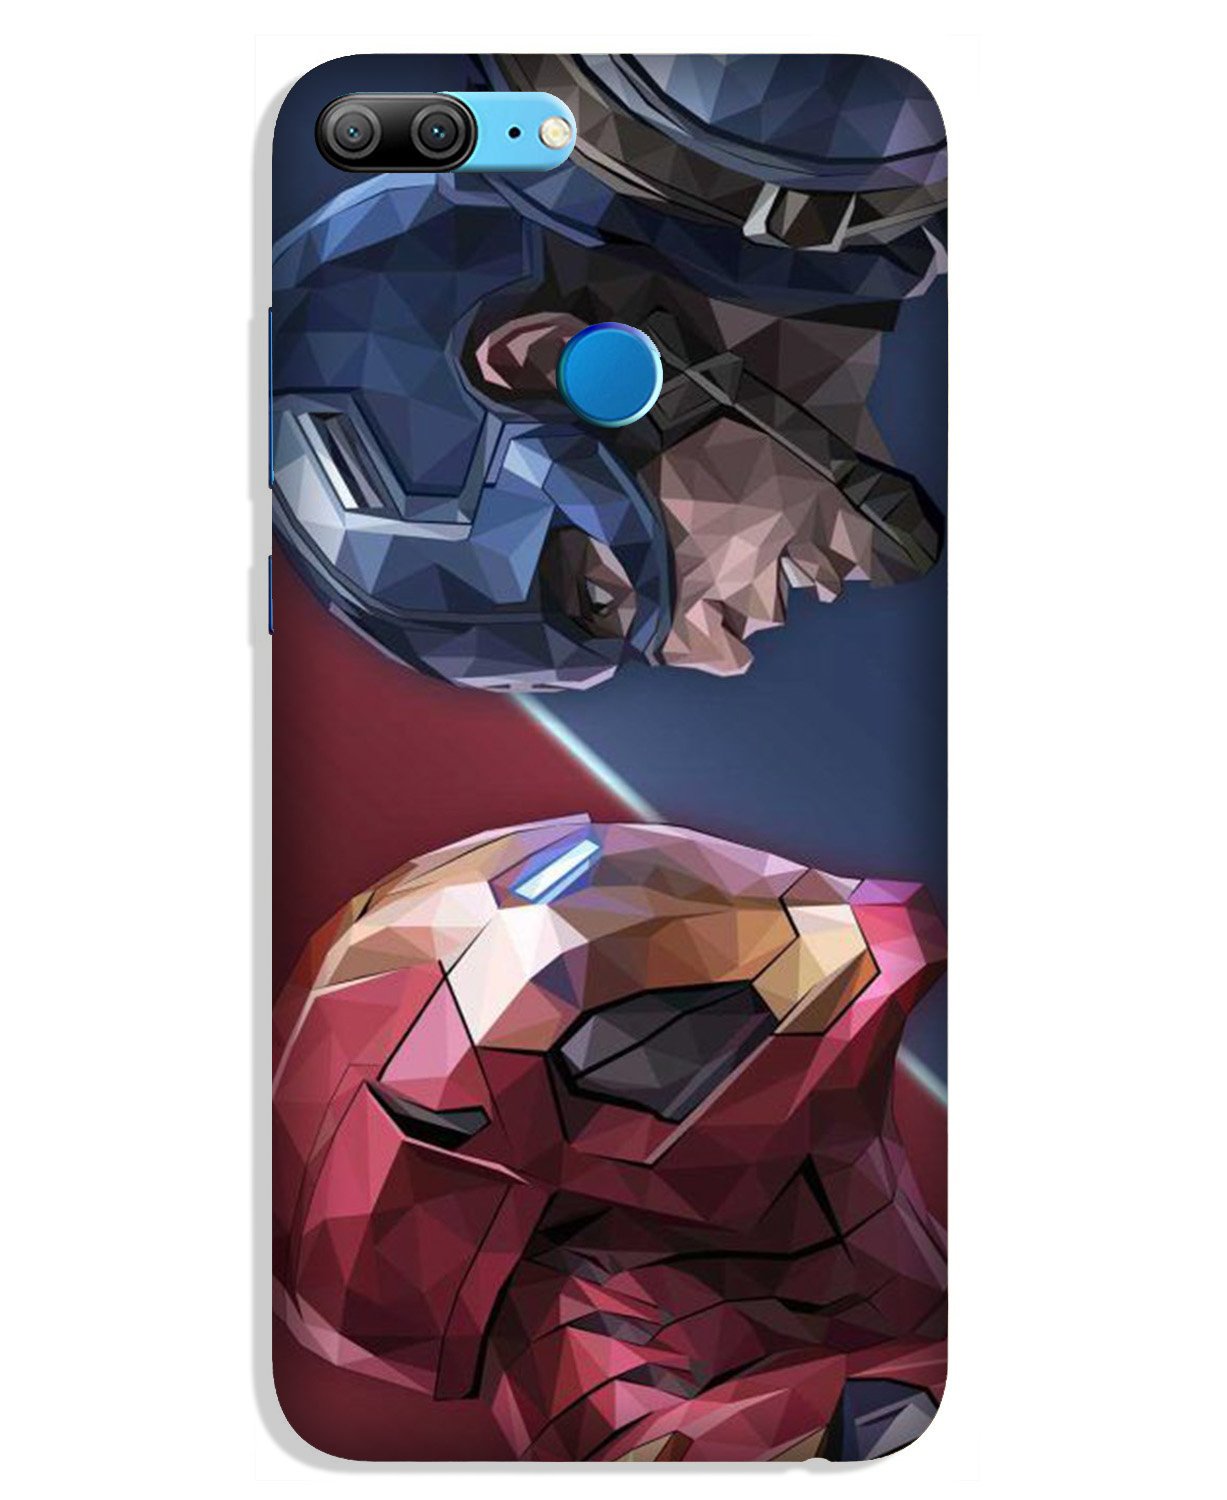 Ironman Captain America Case for Lenovo K9 / K9 Plus (Design No. 245)